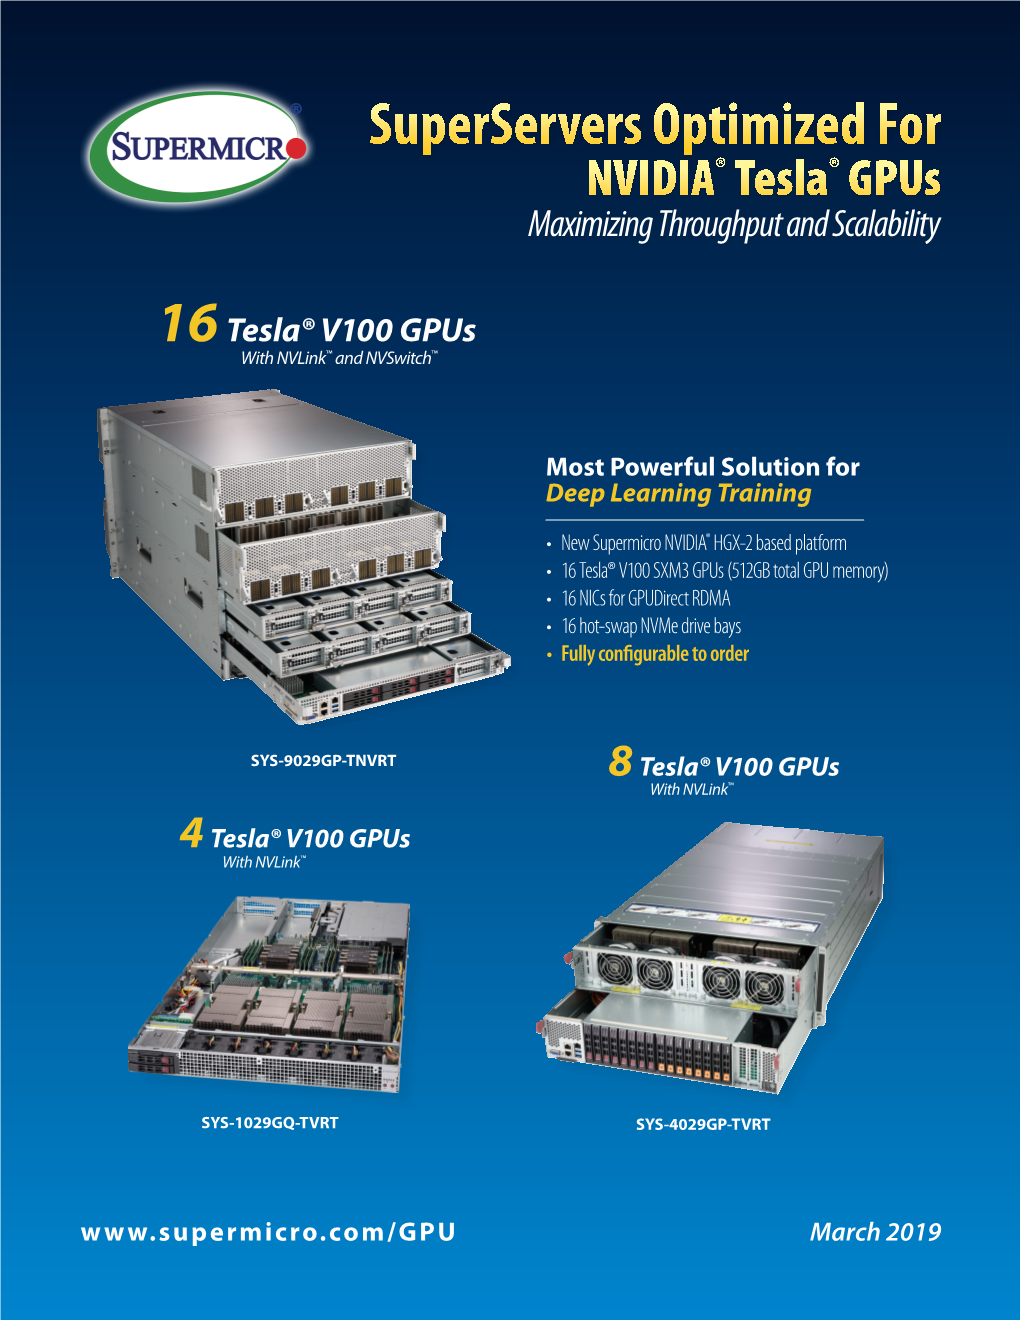 Supermicro GPU Solutions Optimized for NVIDIA Nvlink